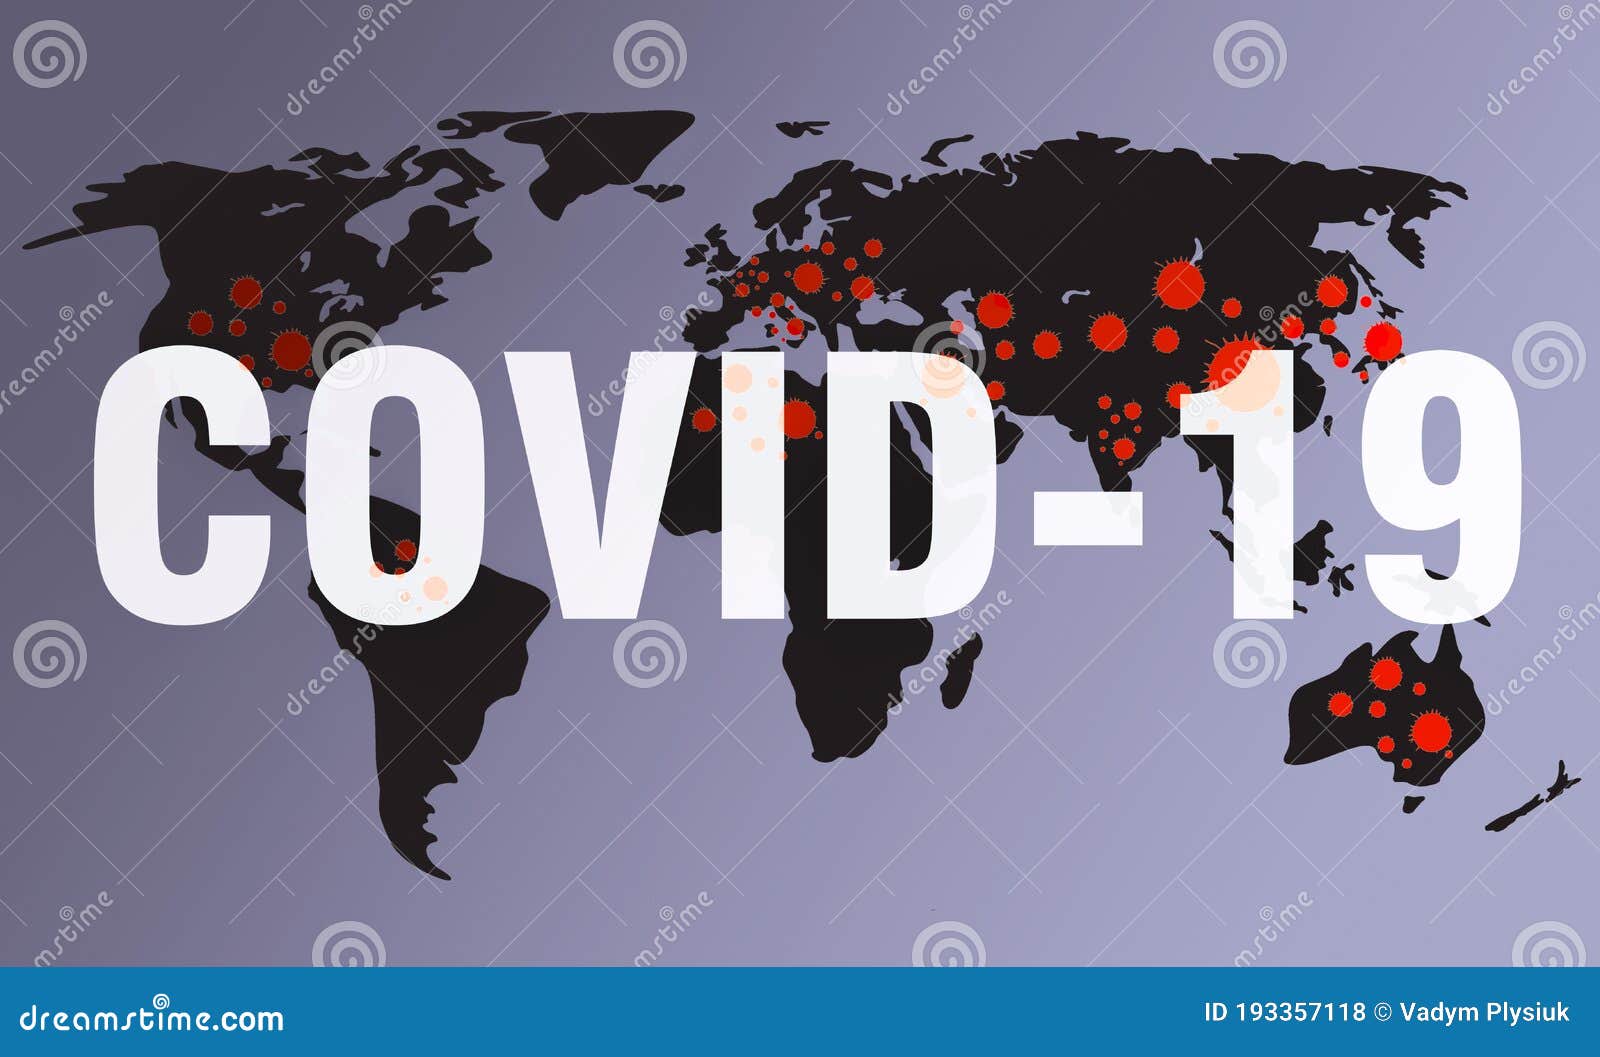 covid-19. epidemic coronavirus. virus moleculas on the world mup. dangerous flu strain cases. pandemic disease. health problem